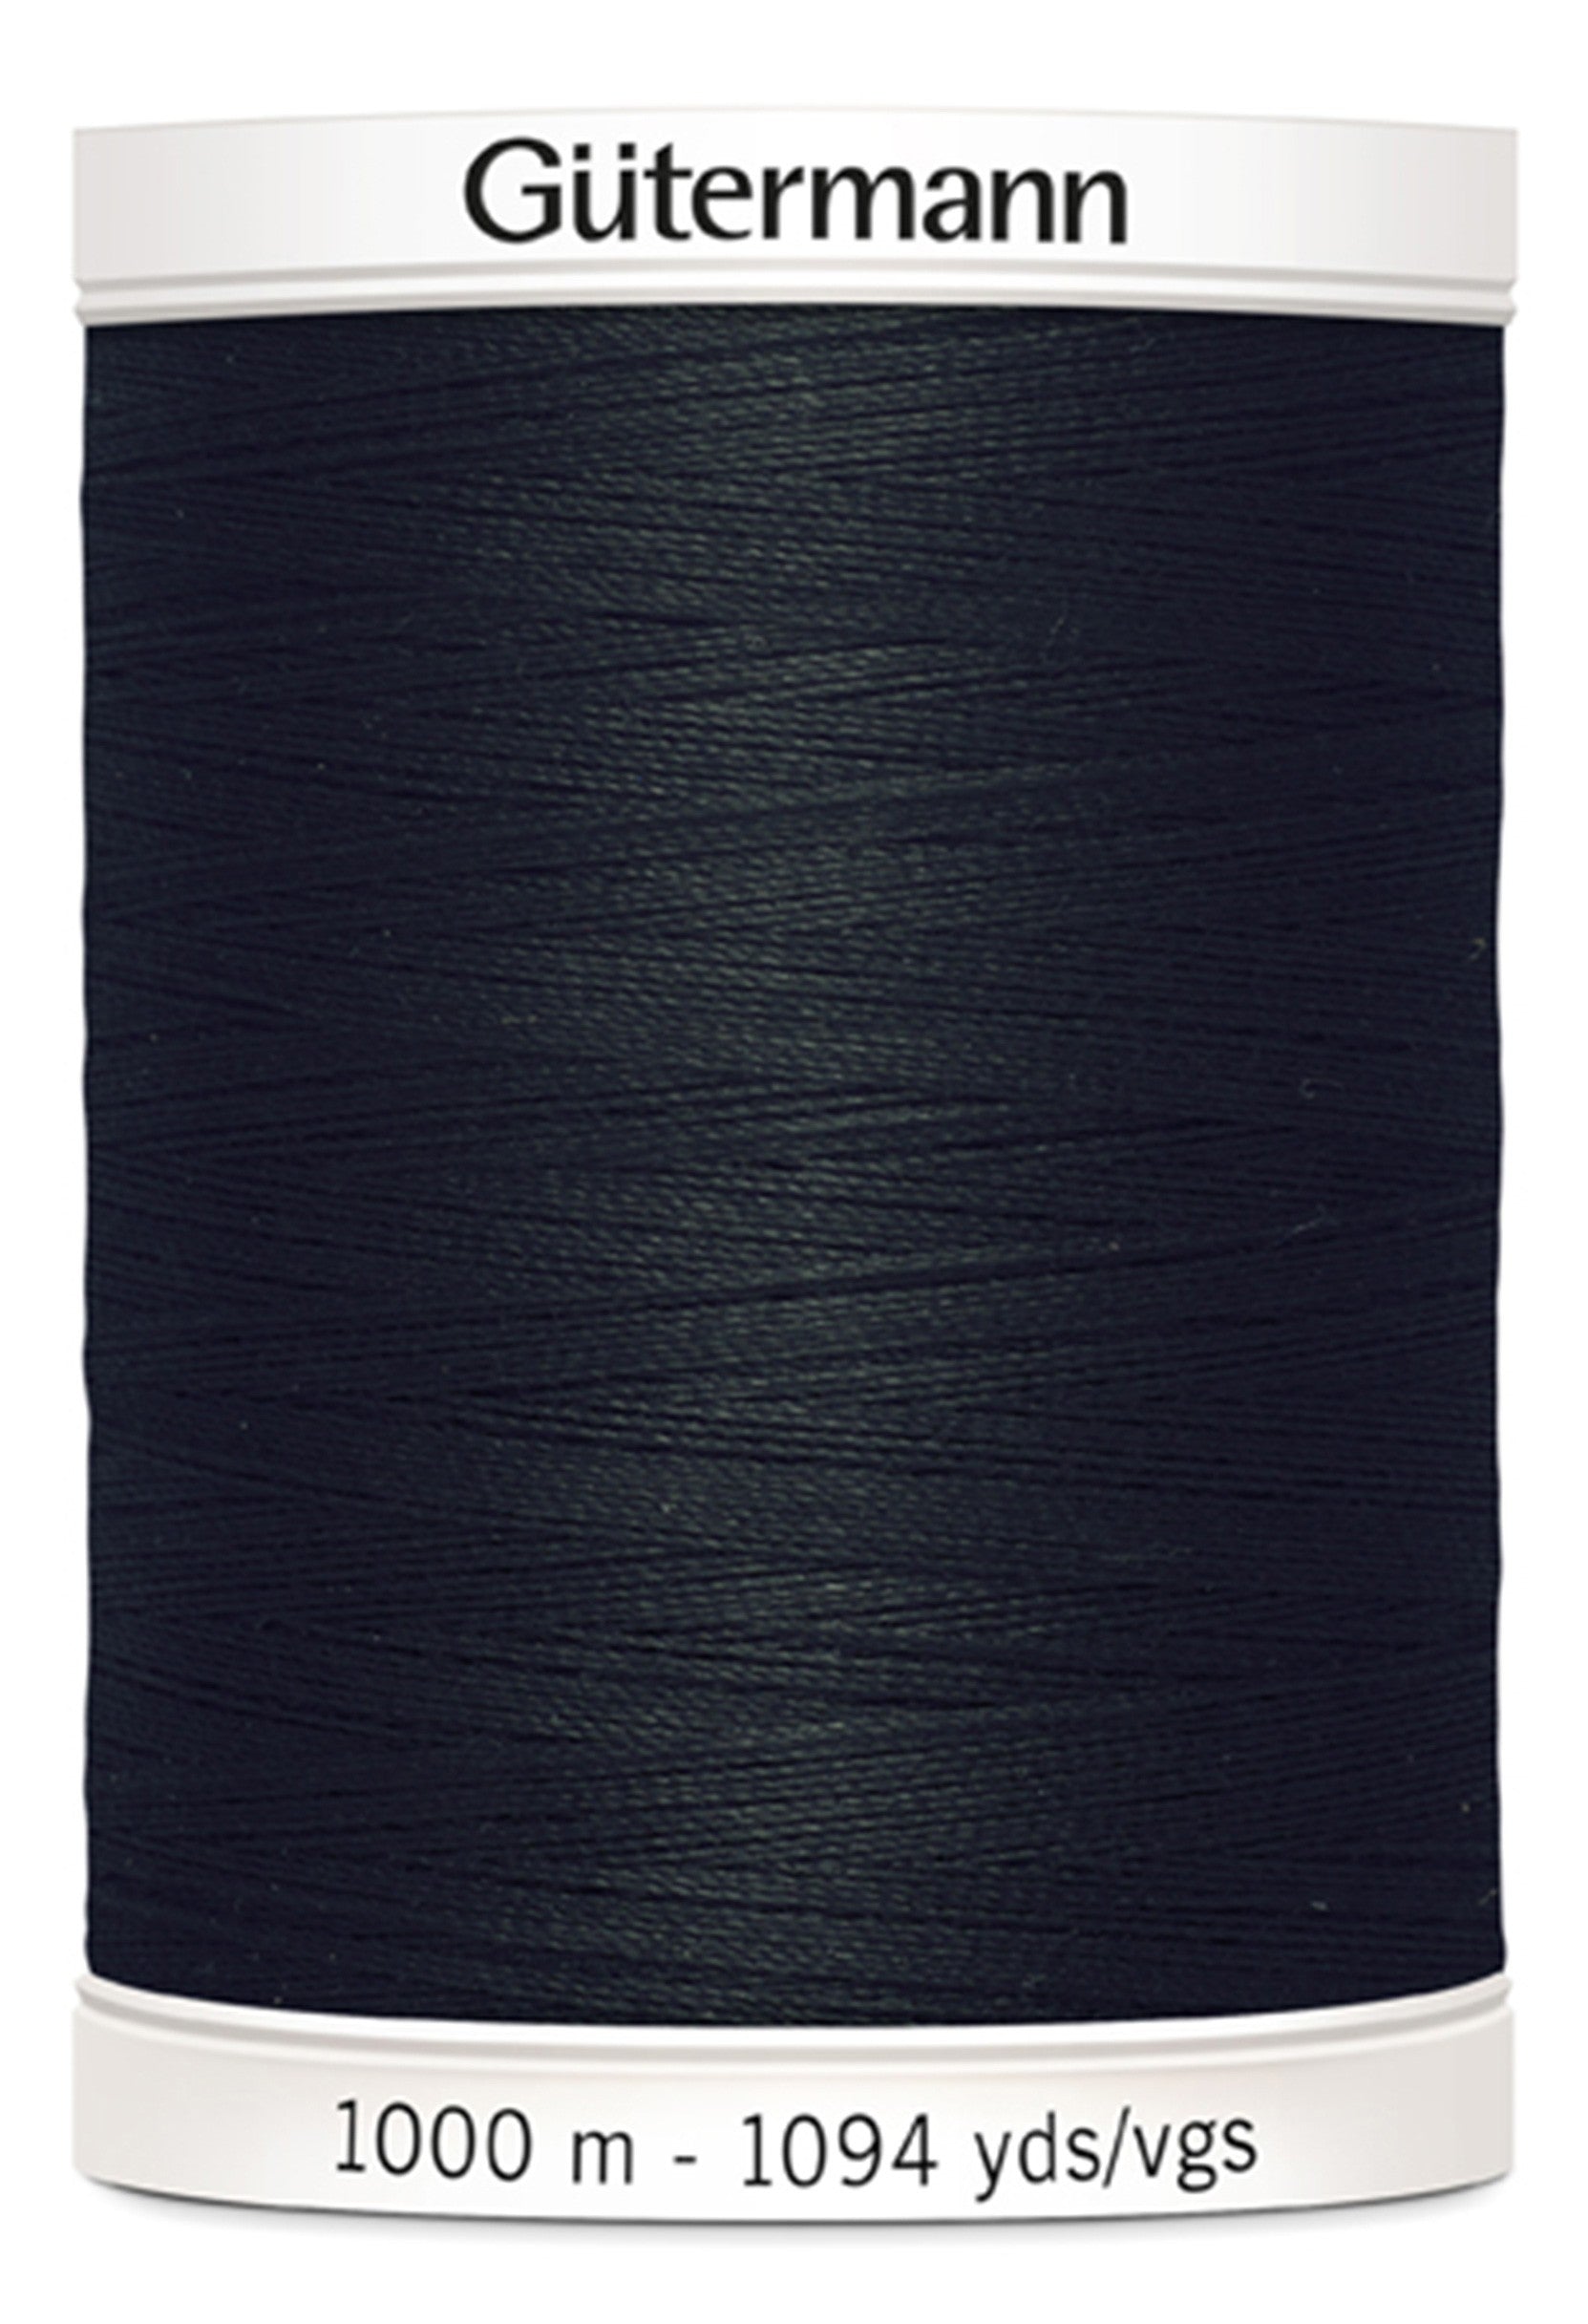 Gutermann Sew-All Polyester 010 Black  1000m/1094yd